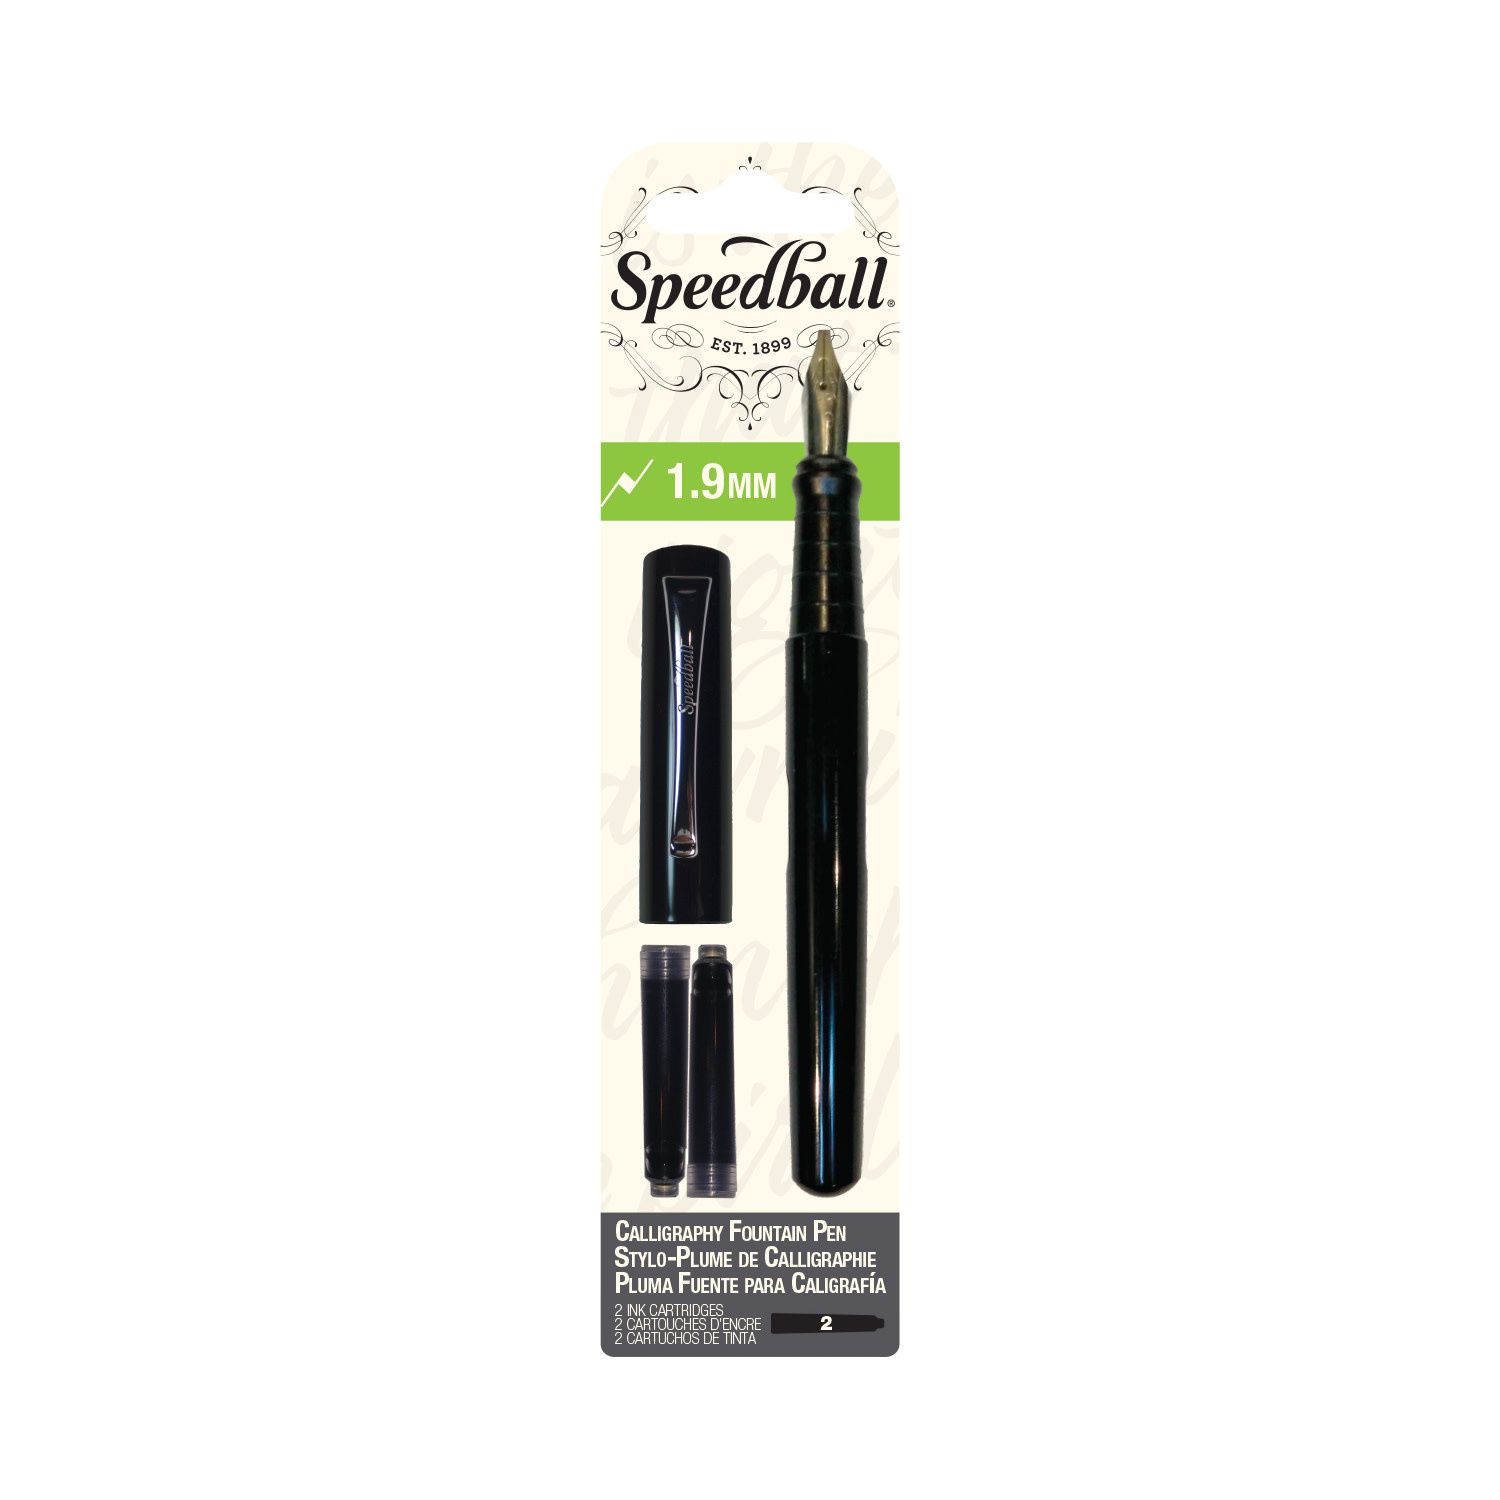 Speedball Calligraphy Fountain Pens, 1.9mm Nib